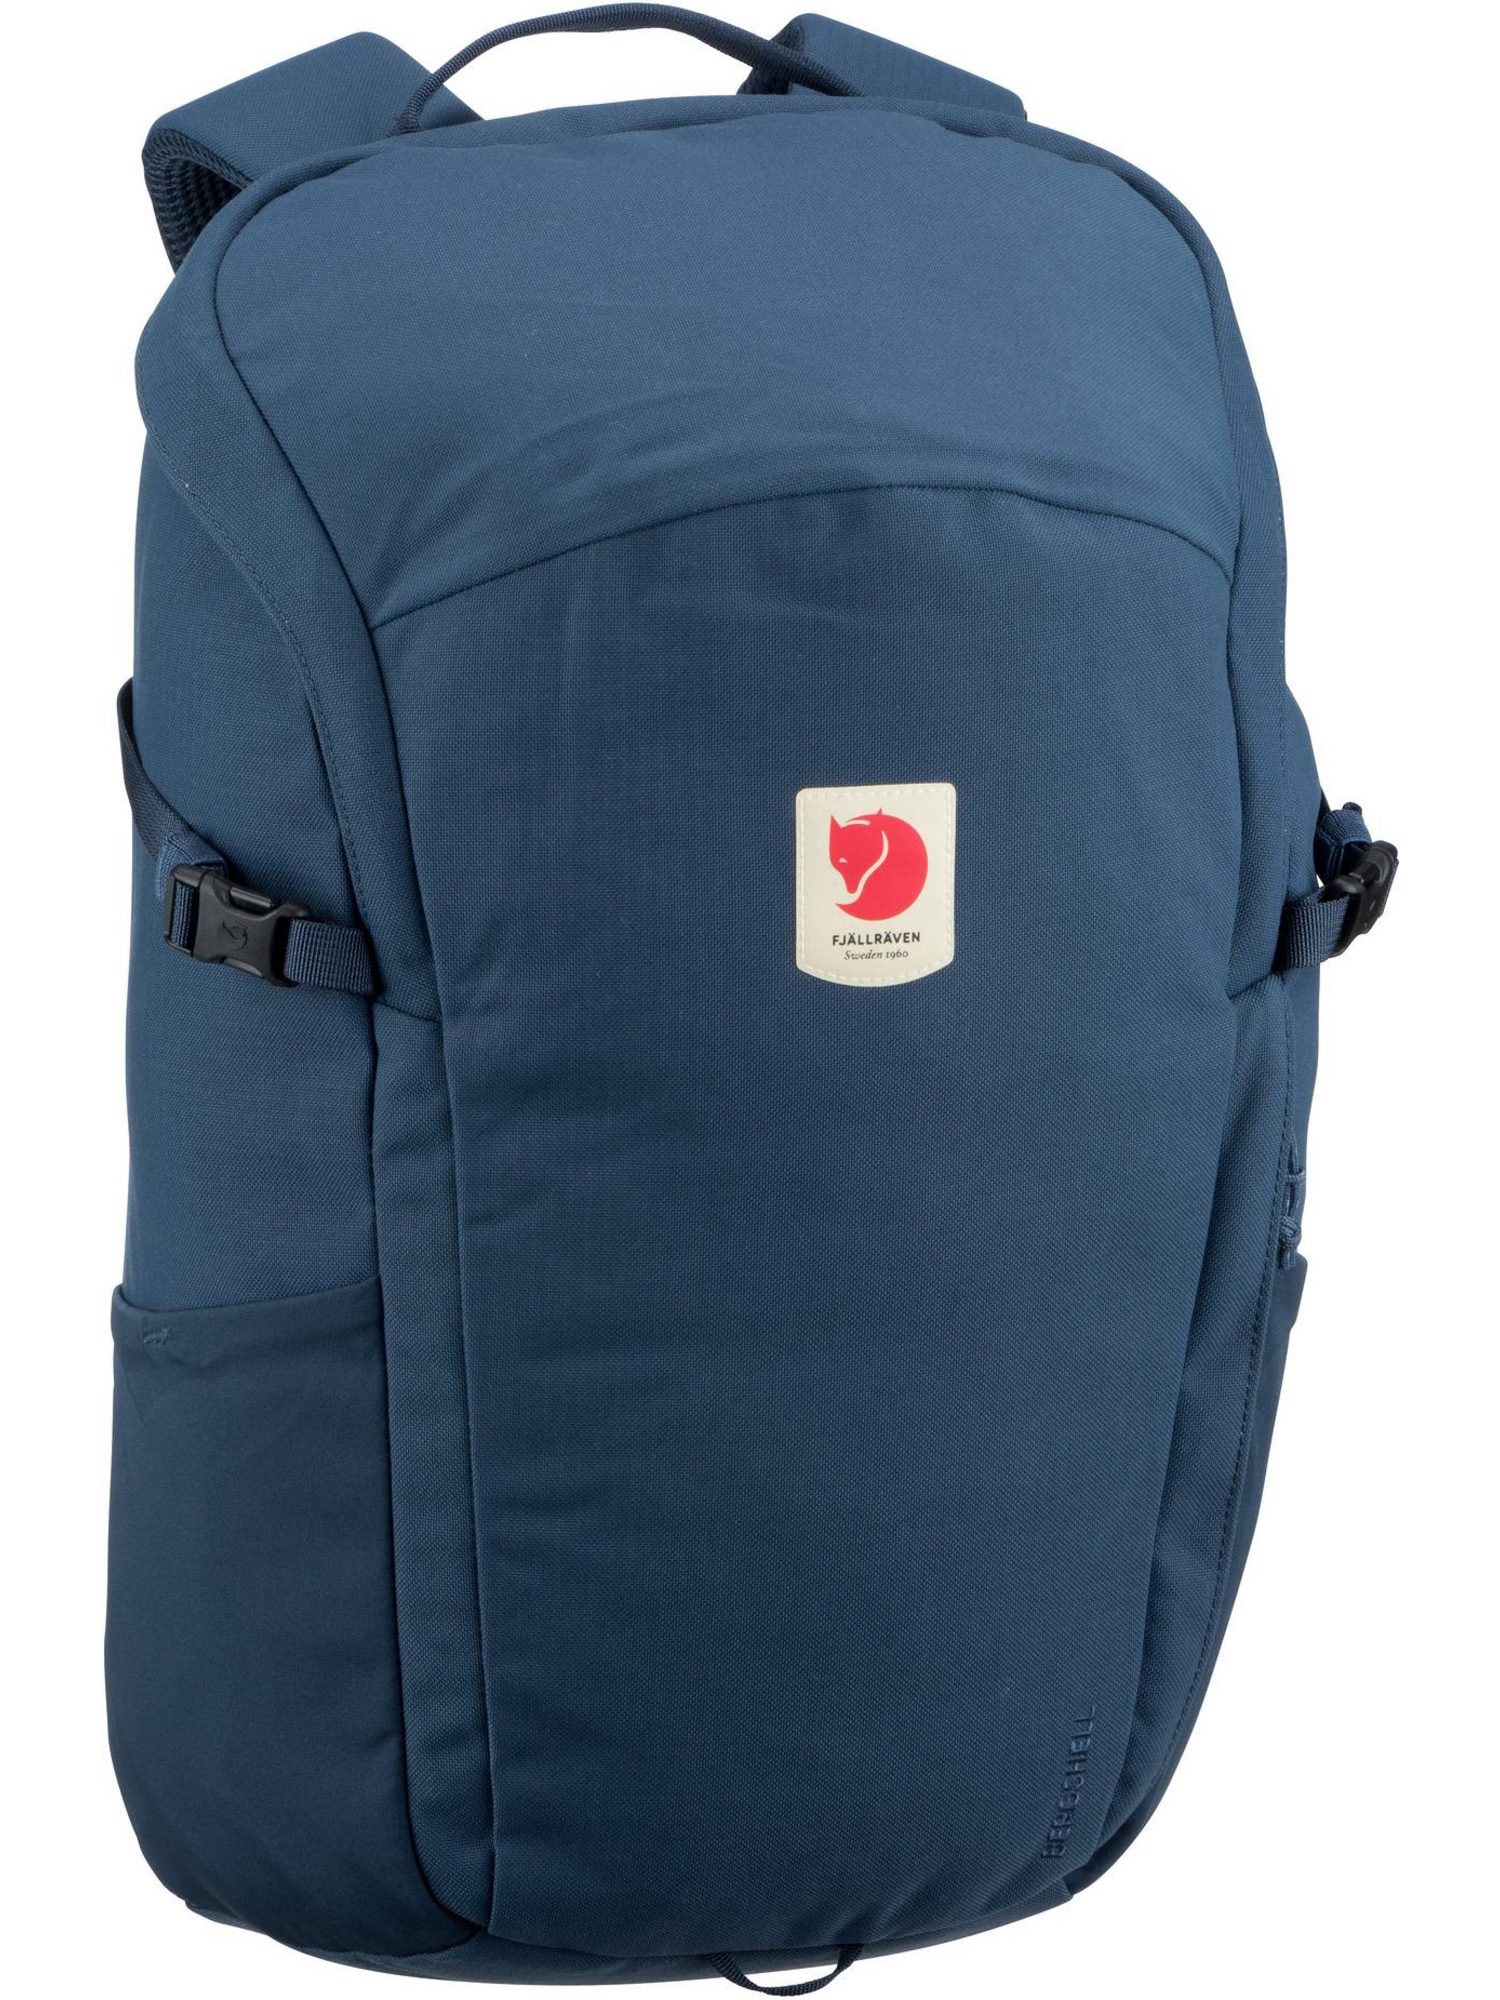 Рюкзак FJÄLLRÄVEN/Backpack Ulvö 23, цвет Mountain Blue сумка рюкзак ulvö среднего размера fjällräven цвет mountain blue